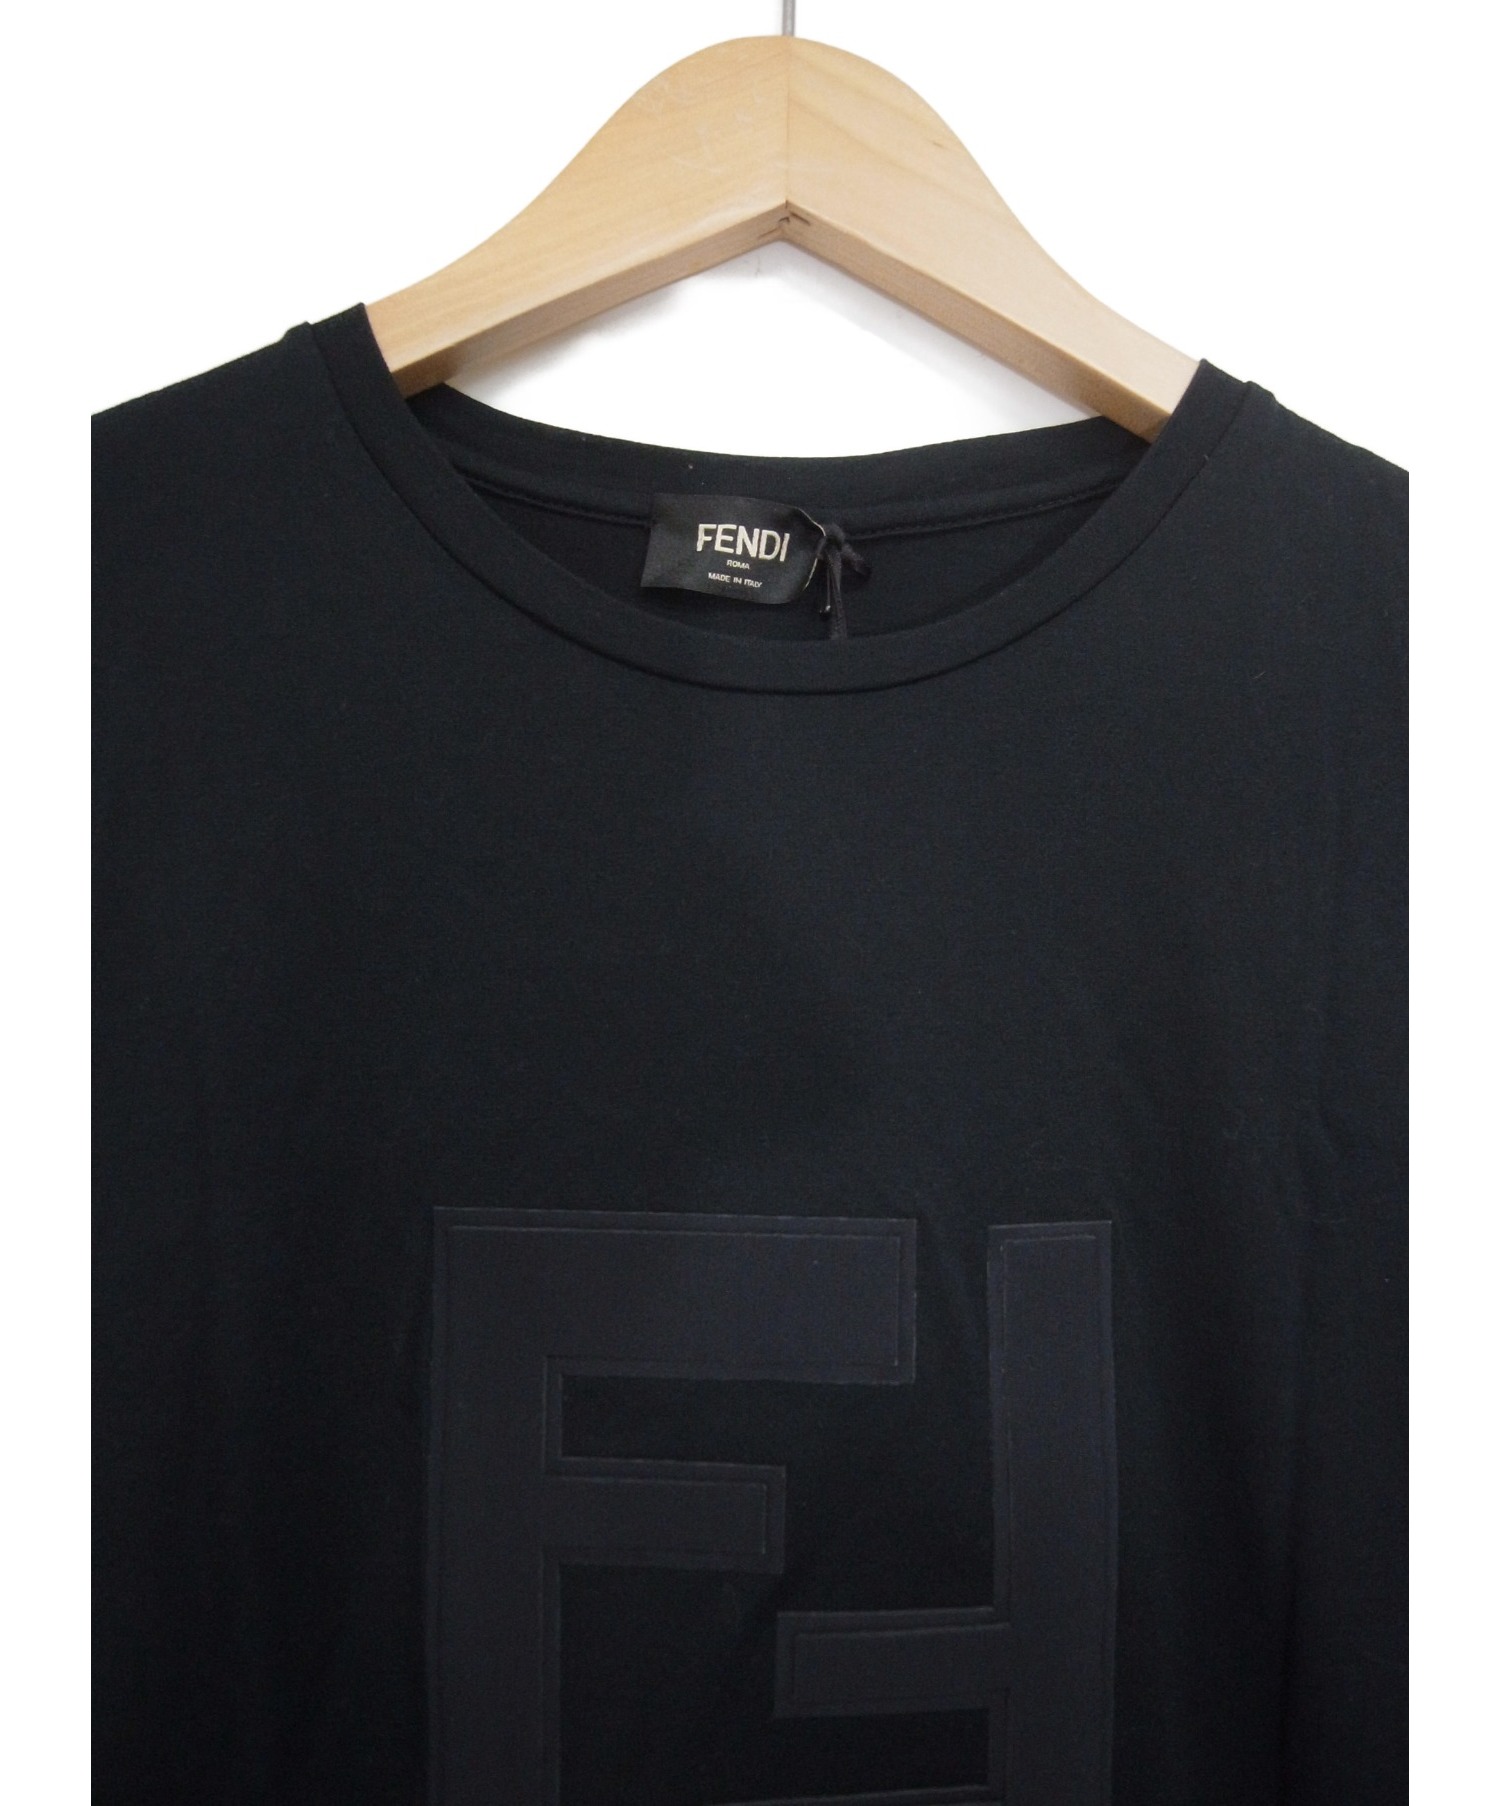 FENDI (フェンディ) FFロゴTシャツ ブラック サイズ:M FAF532 A54P